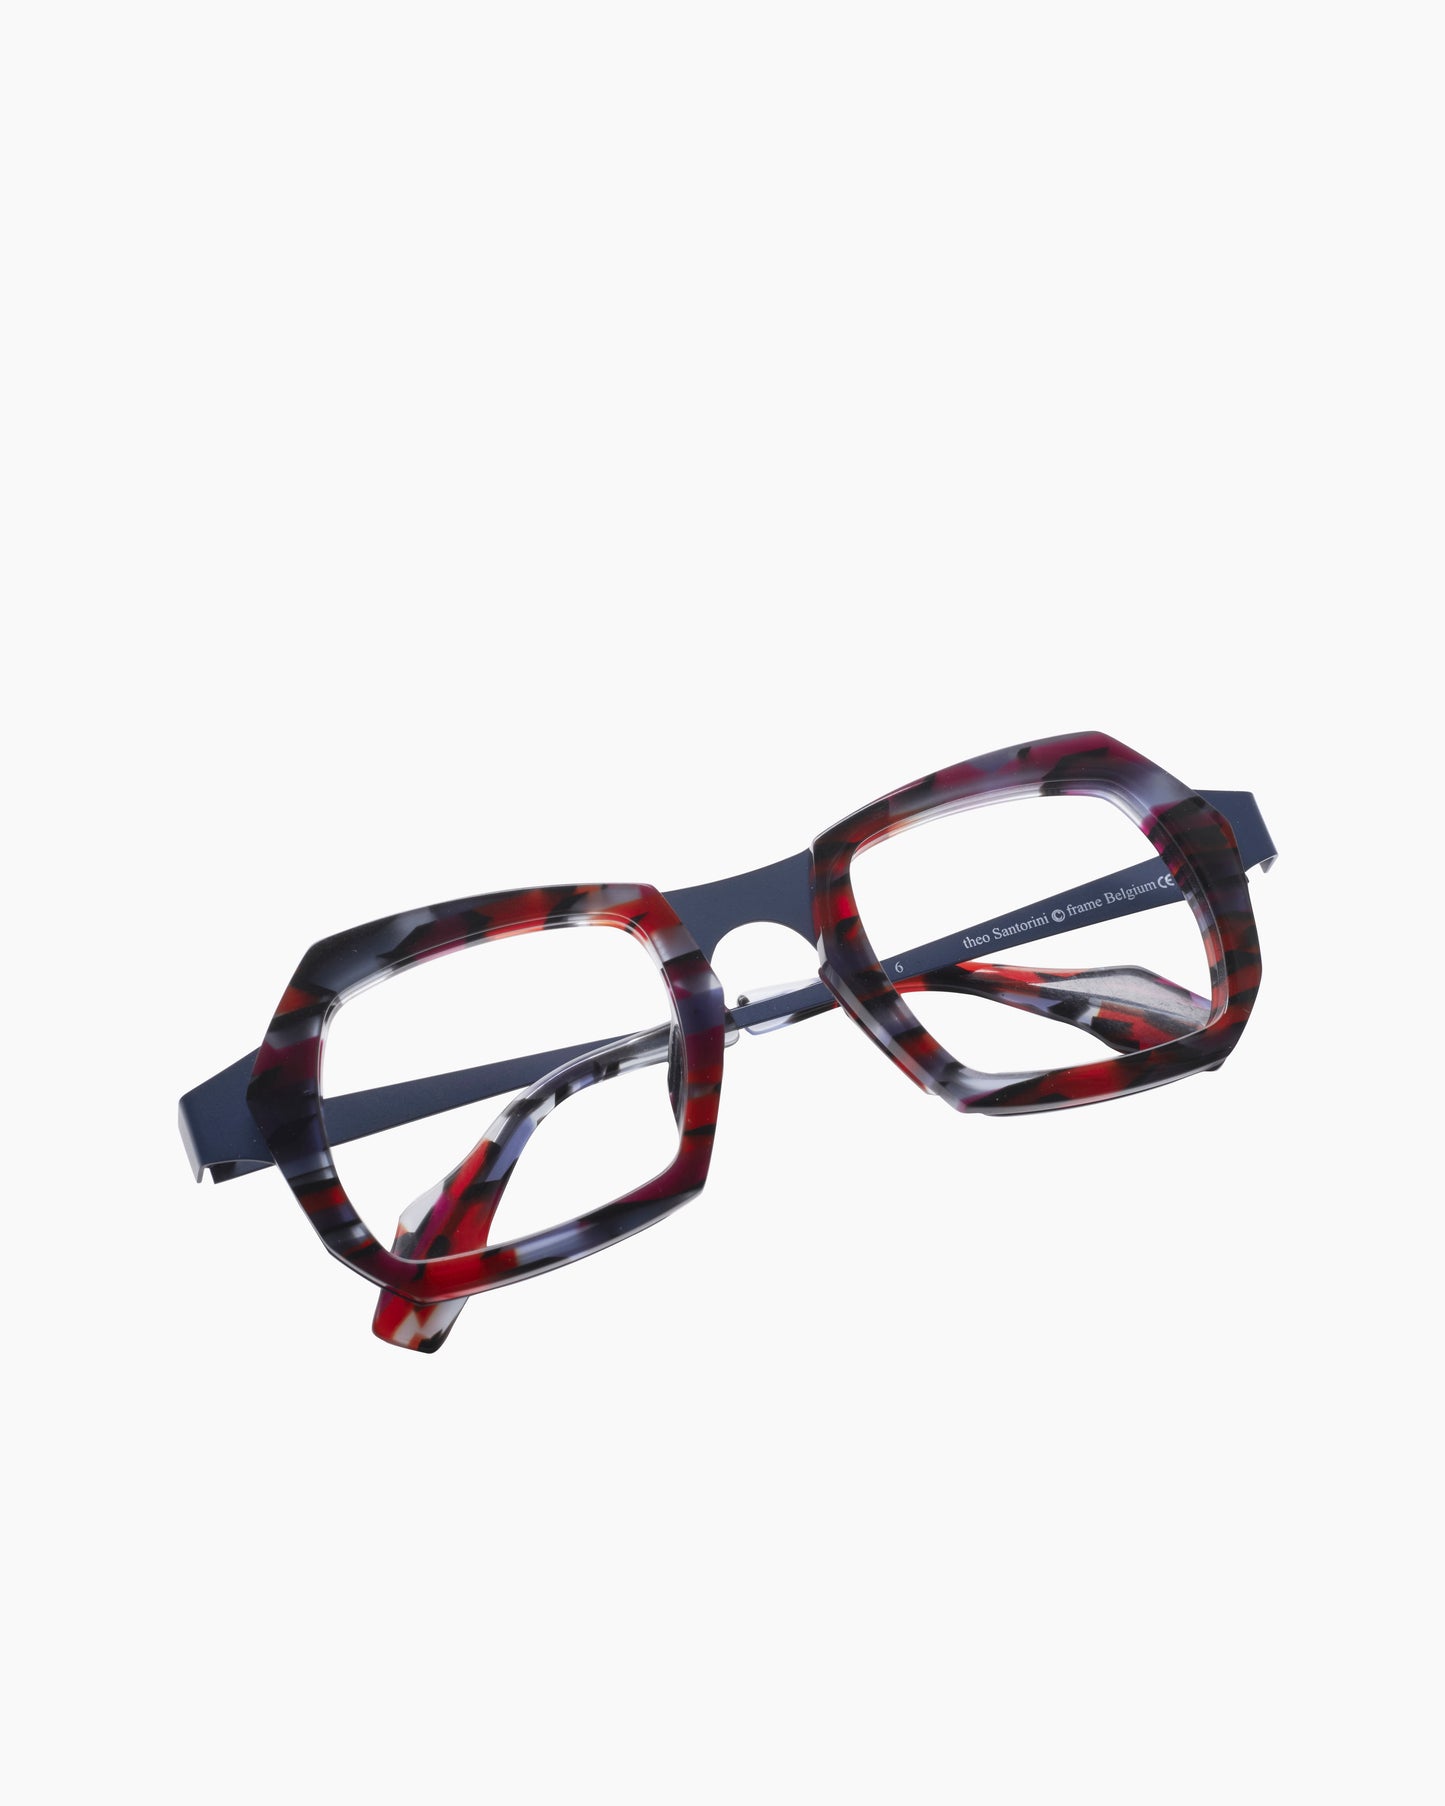 Theo - Santorini - 6 | glasses bar